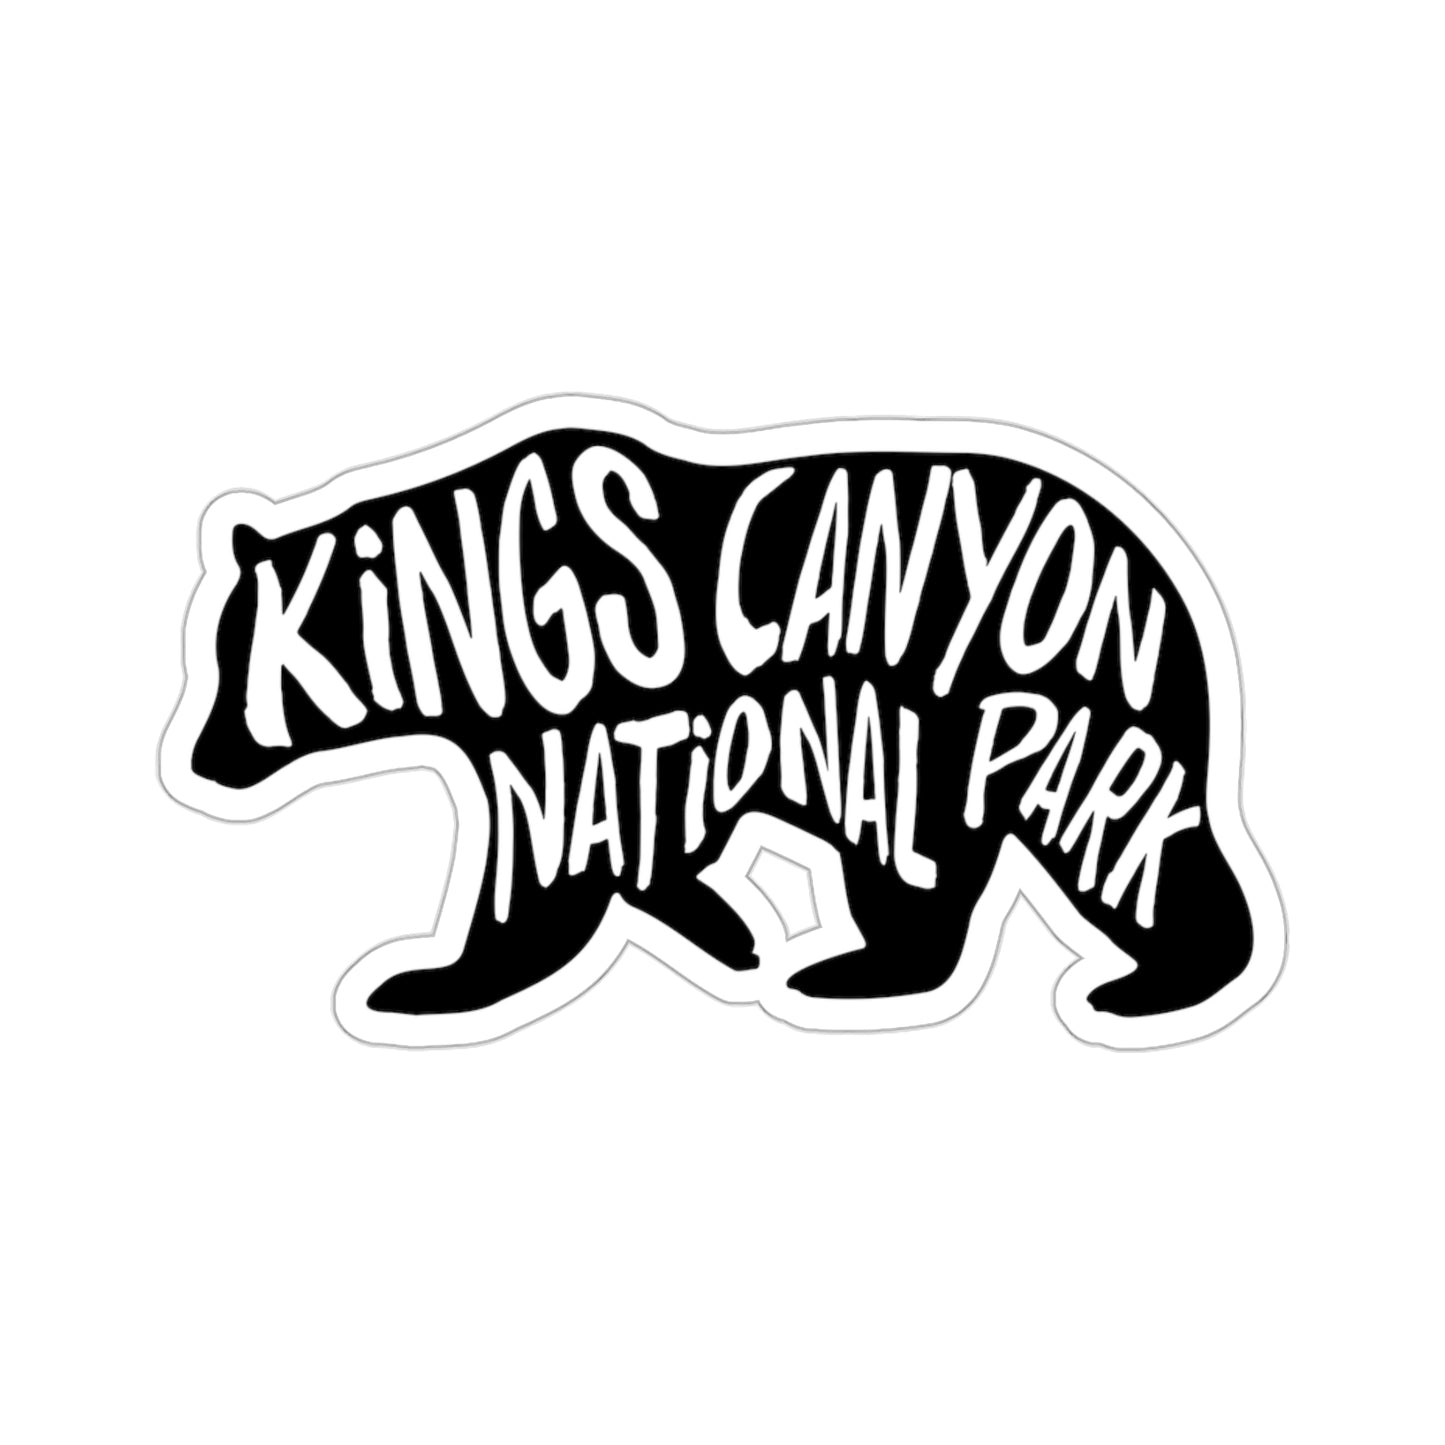 Kings Canyon National Park Sticker - Black Bear